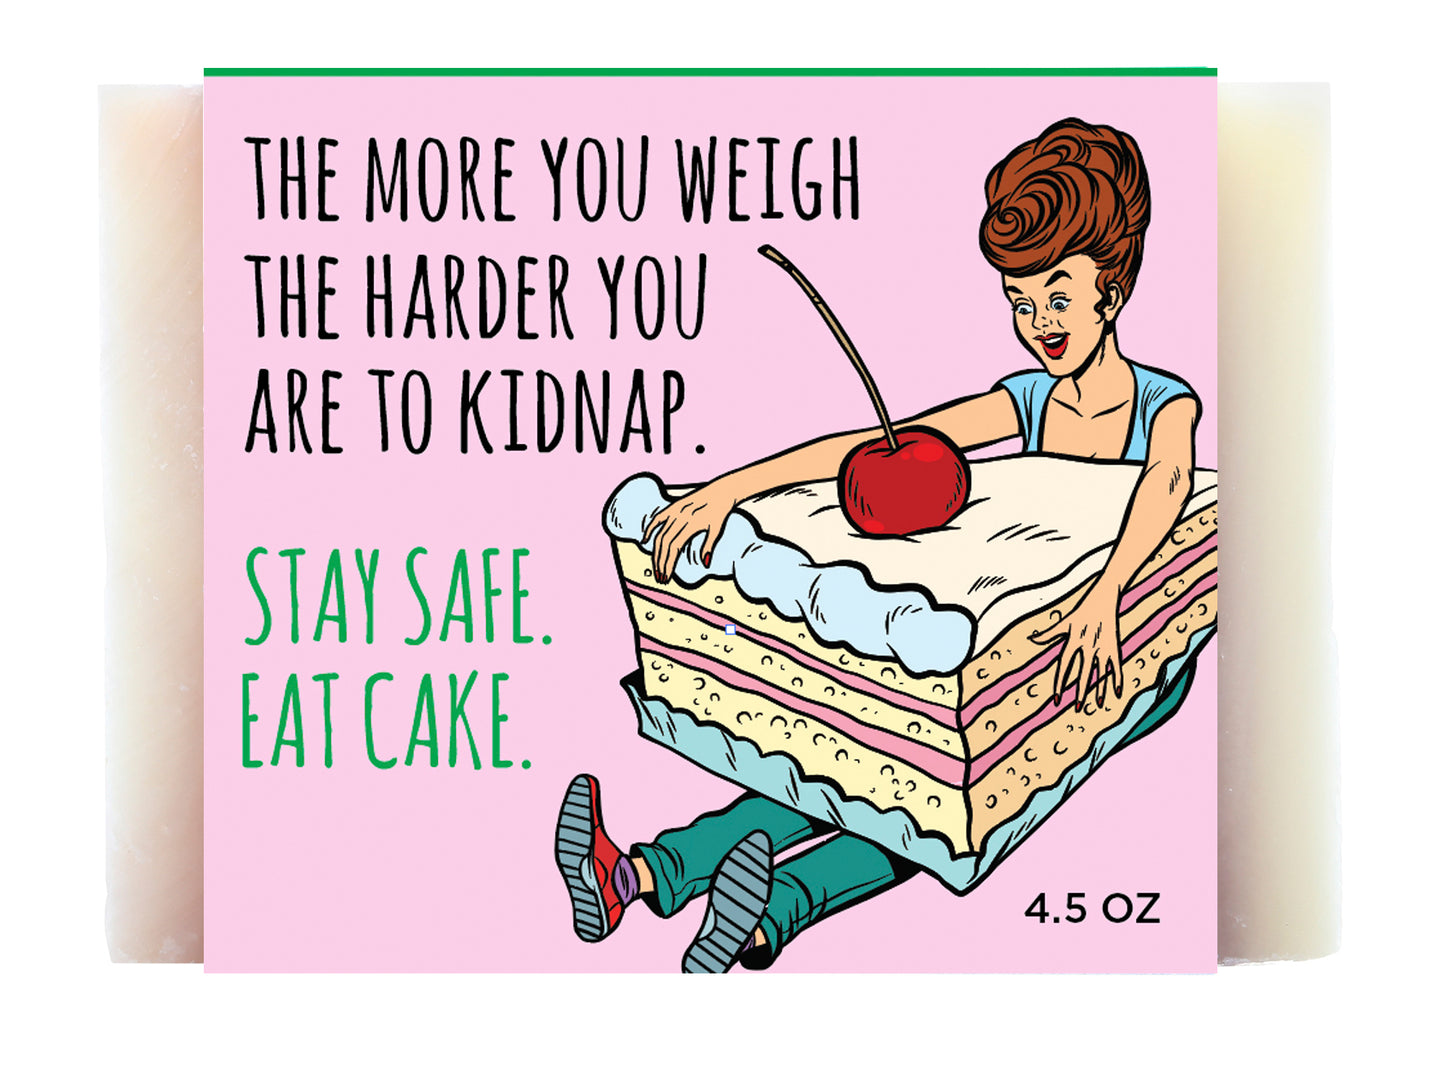 Stay Safe. Eat Cake.